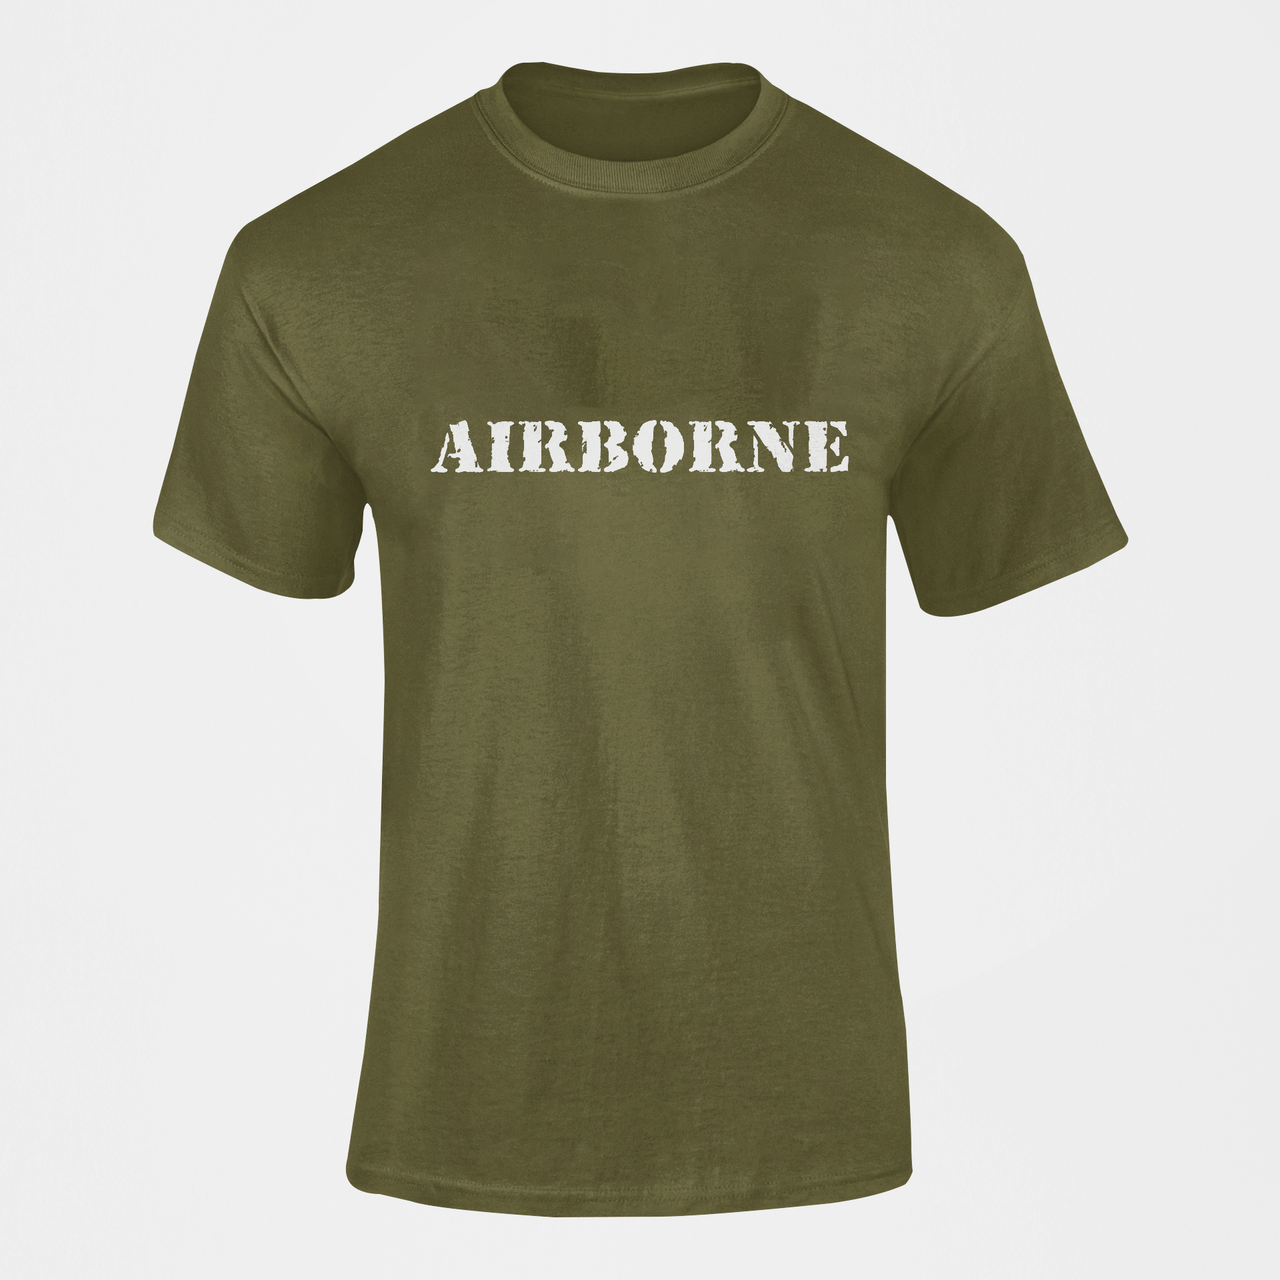 Military T-shirt - Airborne (Men)